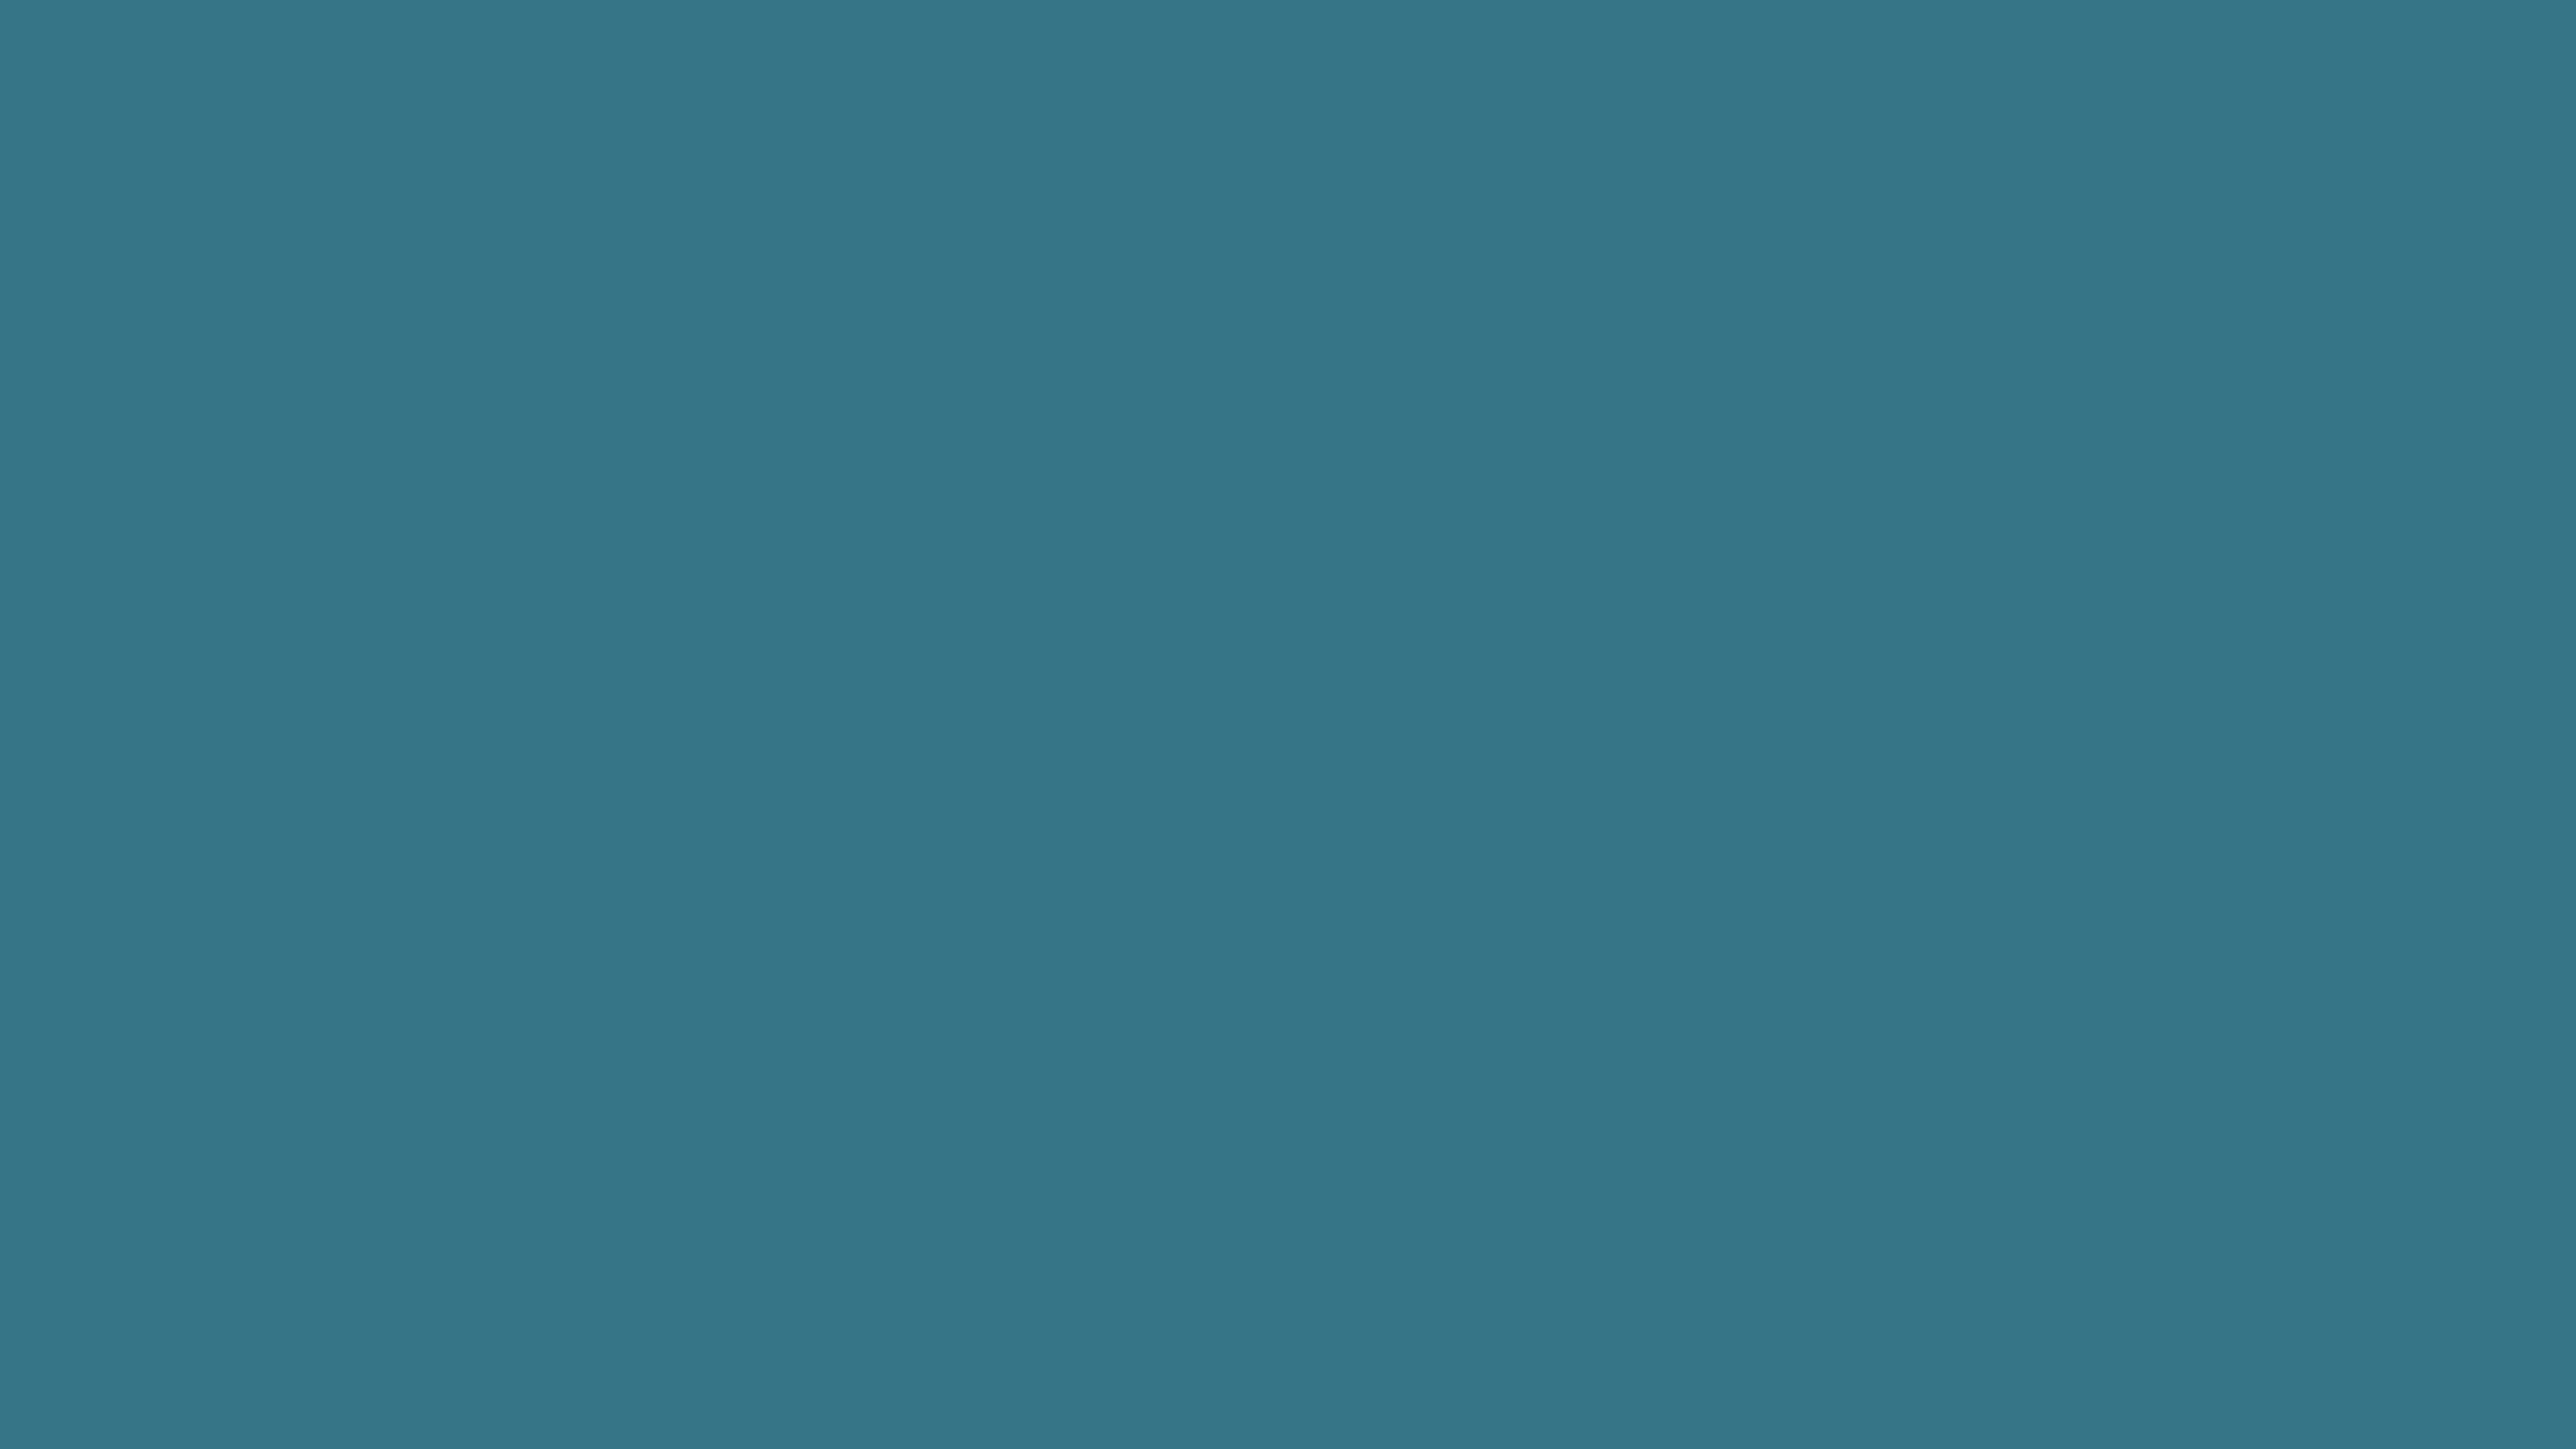 3840x2160 Teal Blue Solid Color Background